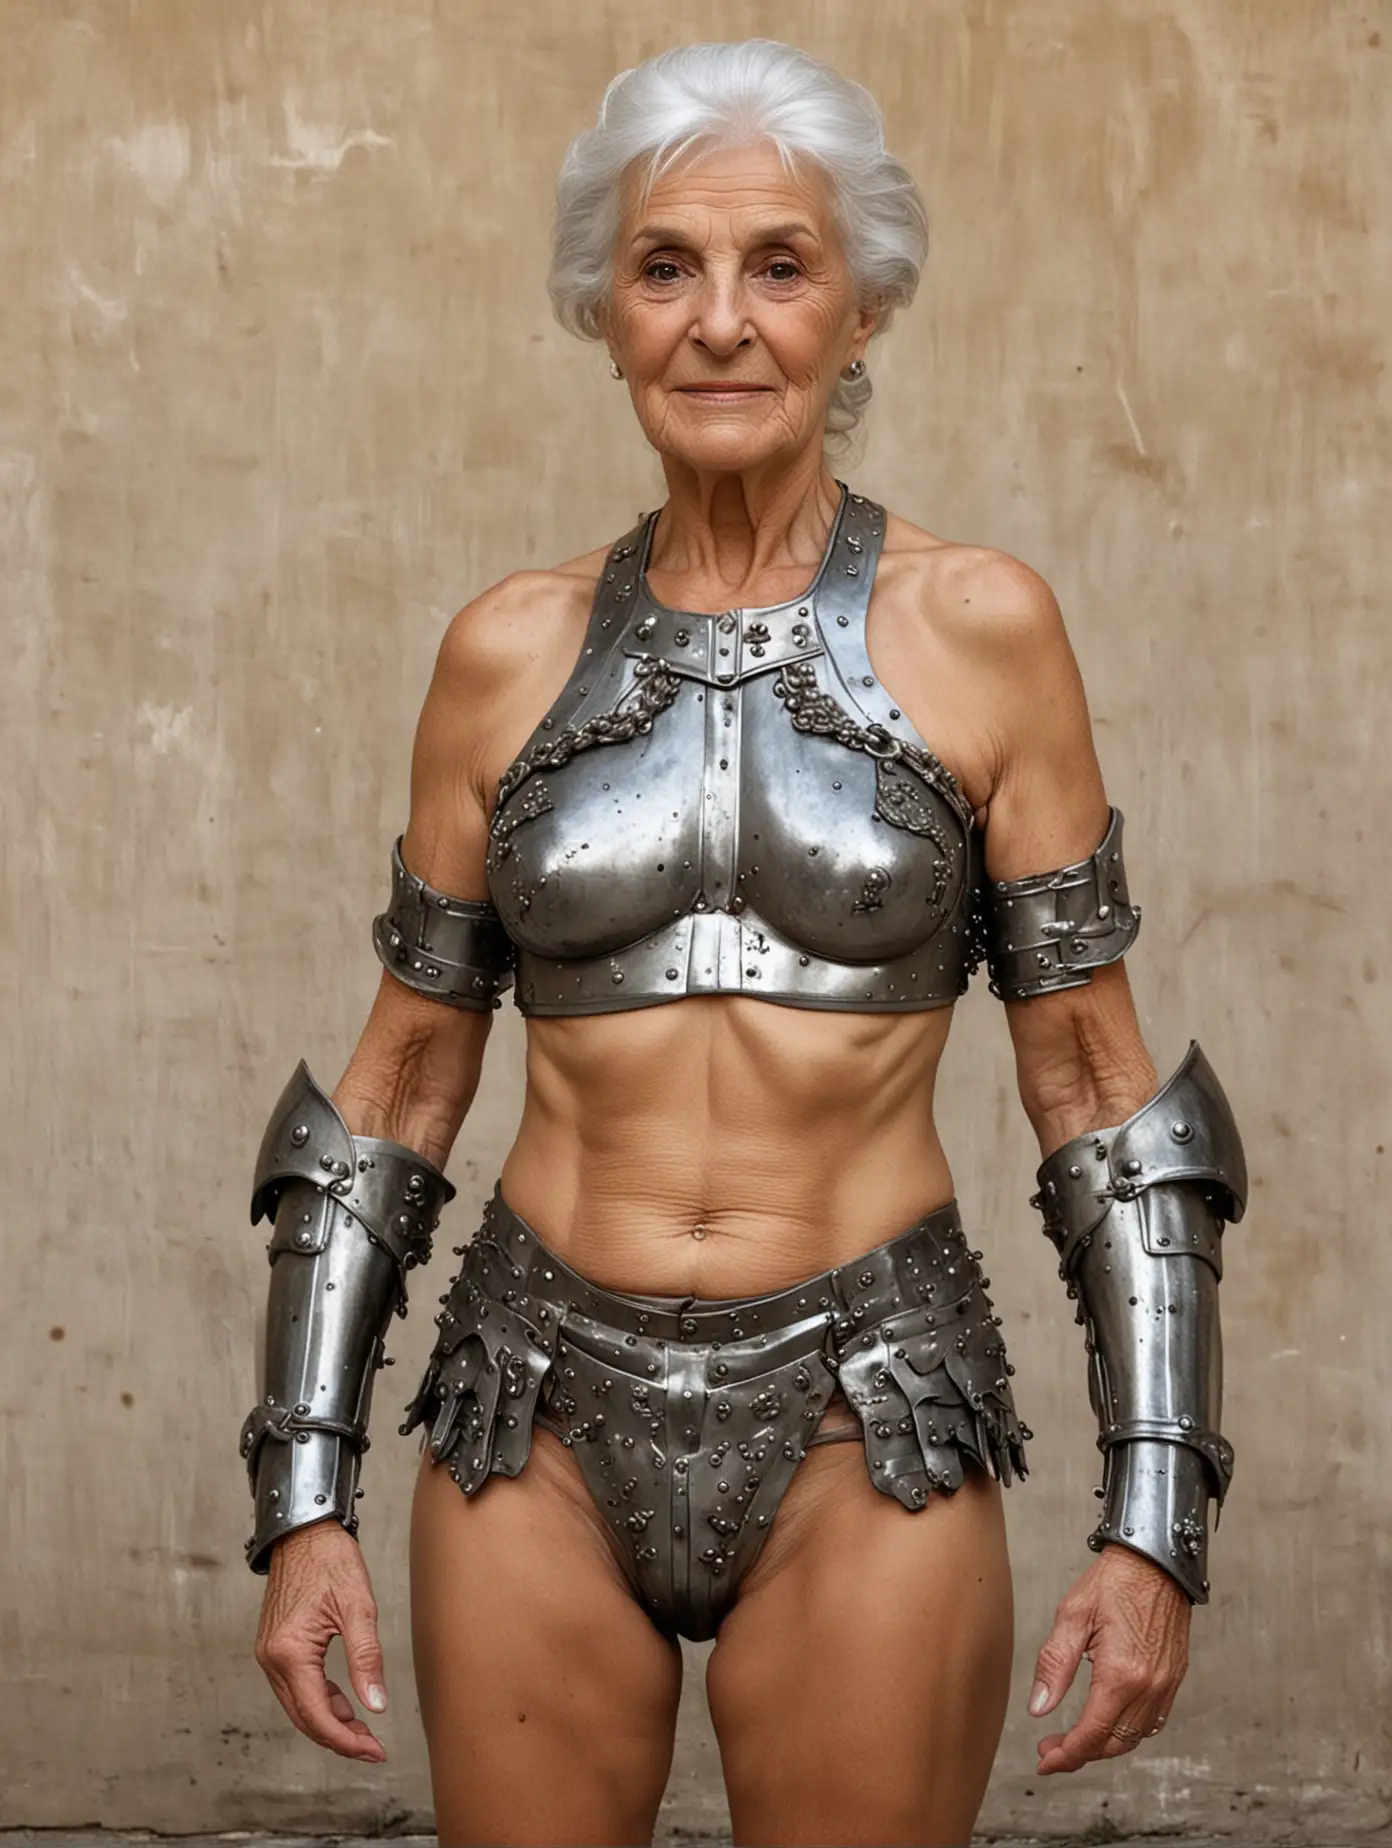 Elderly-Italian-Woman-in-Bikini-Armor